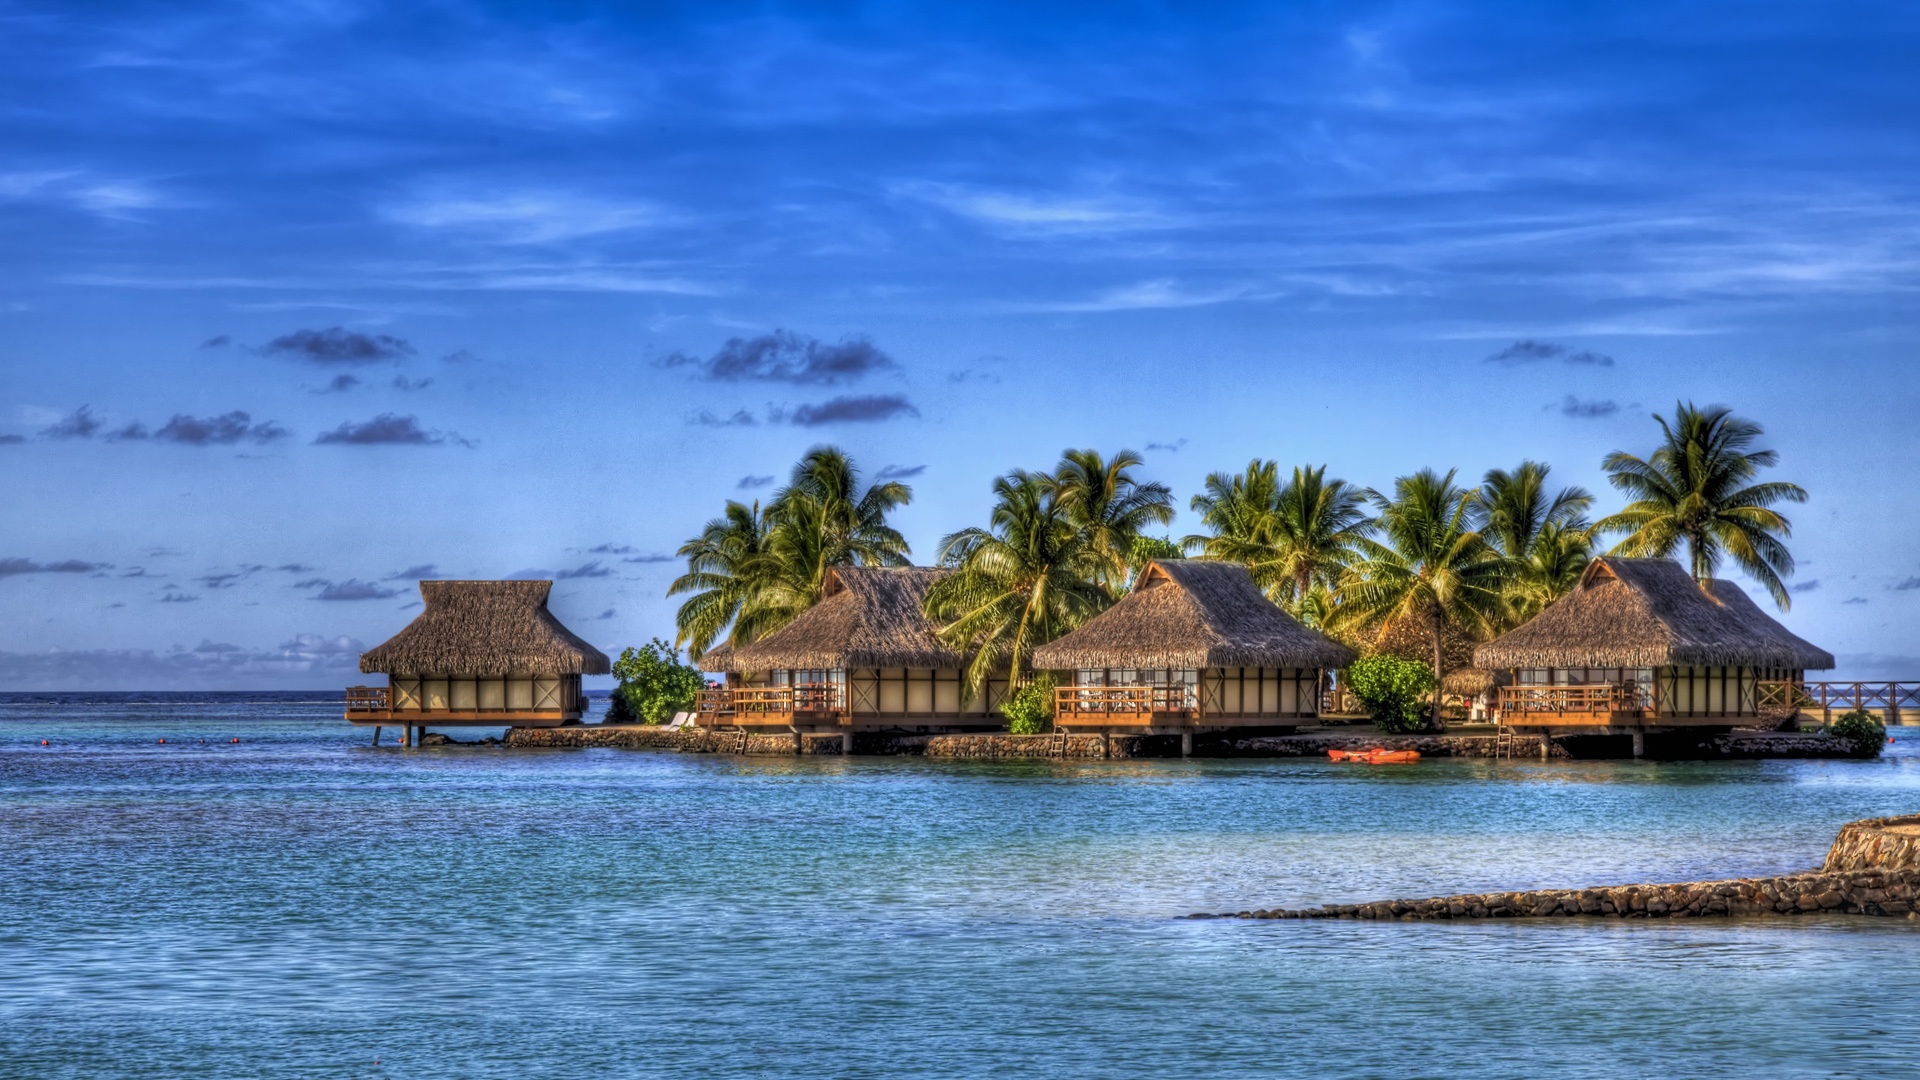 Maldives Island Hotel HDr Full HD Desktop Wallpaper 1080p